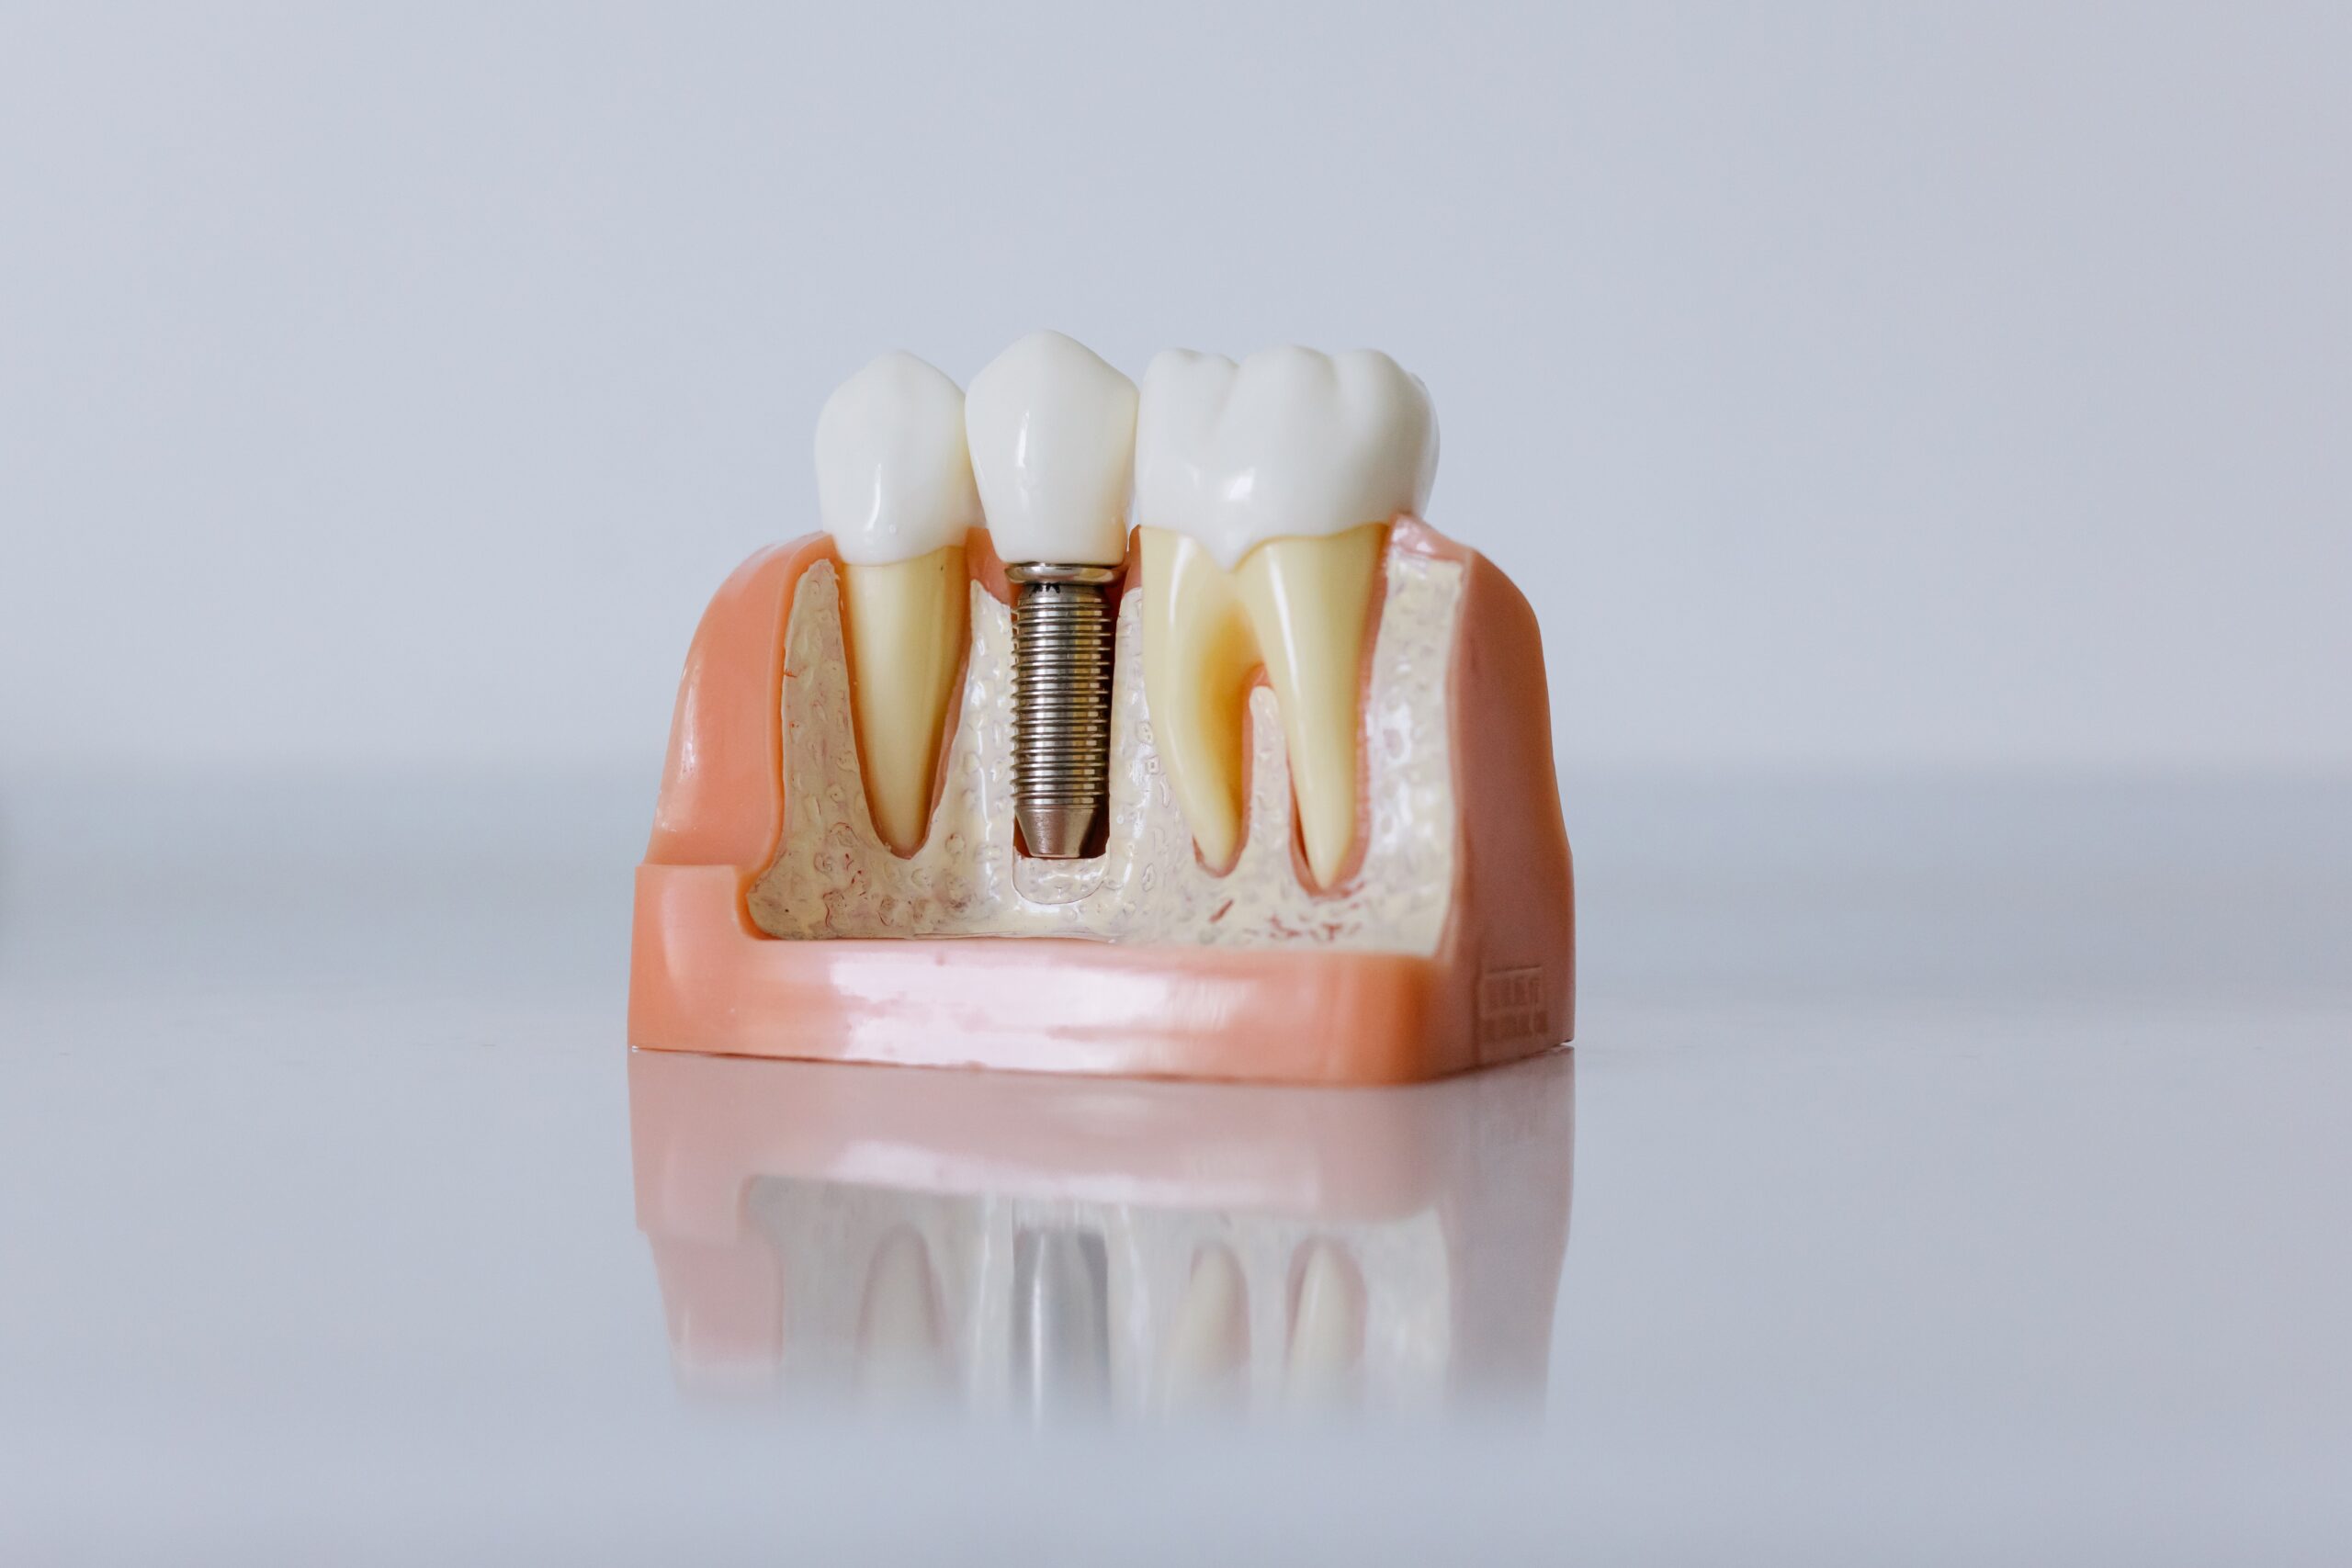 Myths surrounding dental implants